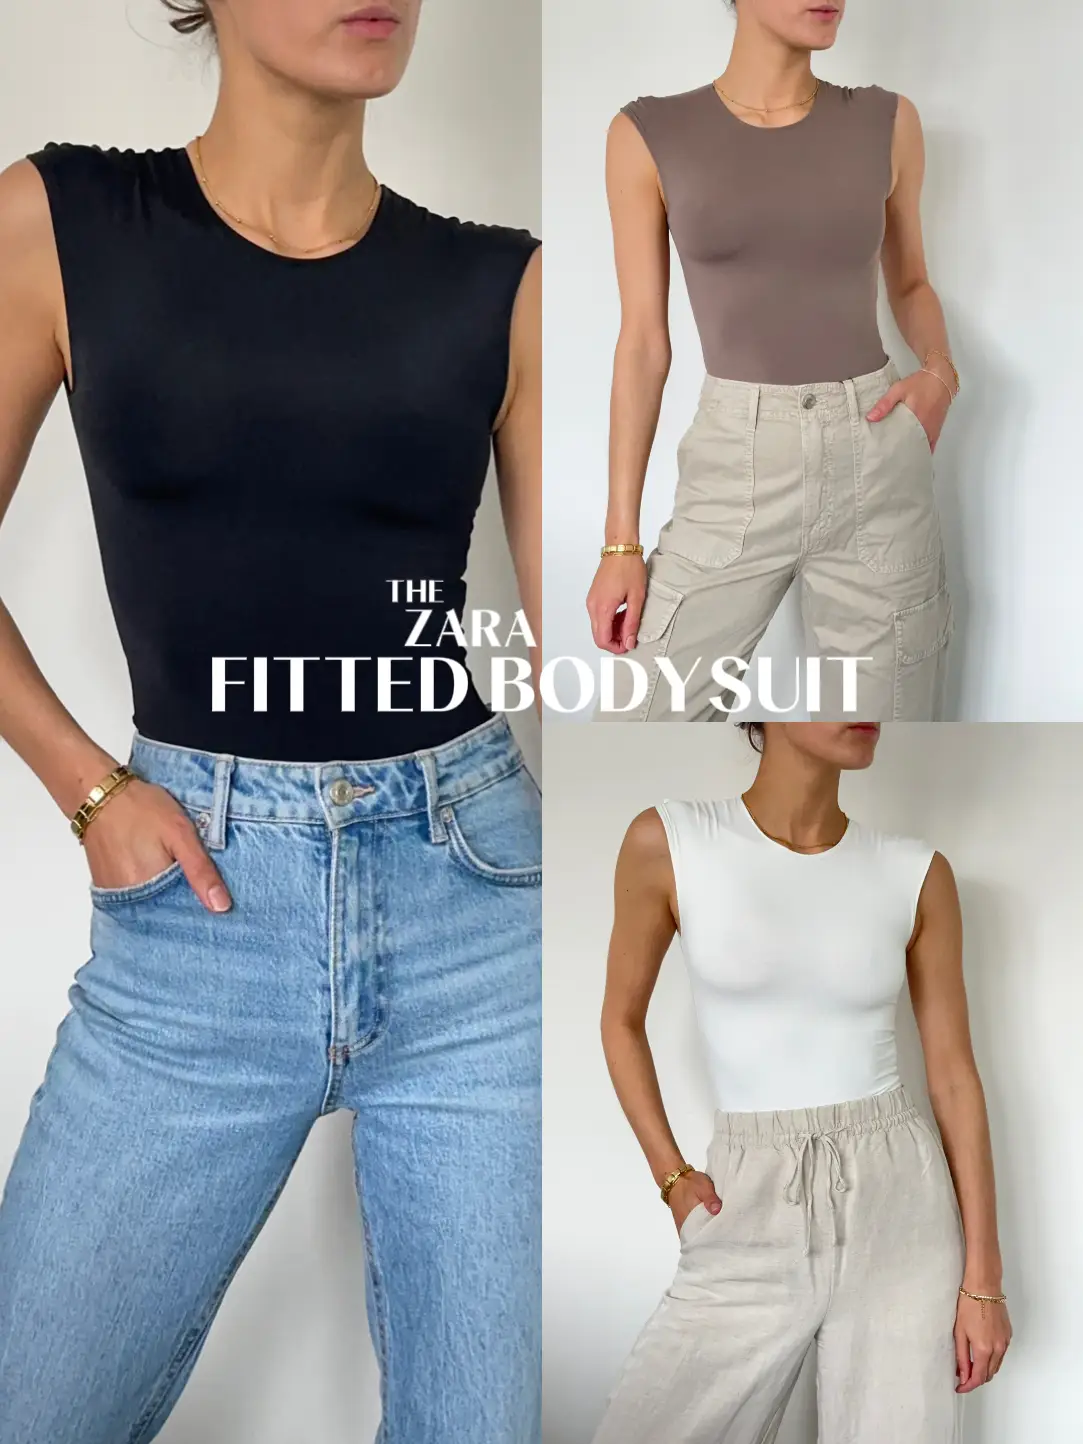 Perfect fitting Zara bodysuit 🤍, Gallery posted by ambermaylowe